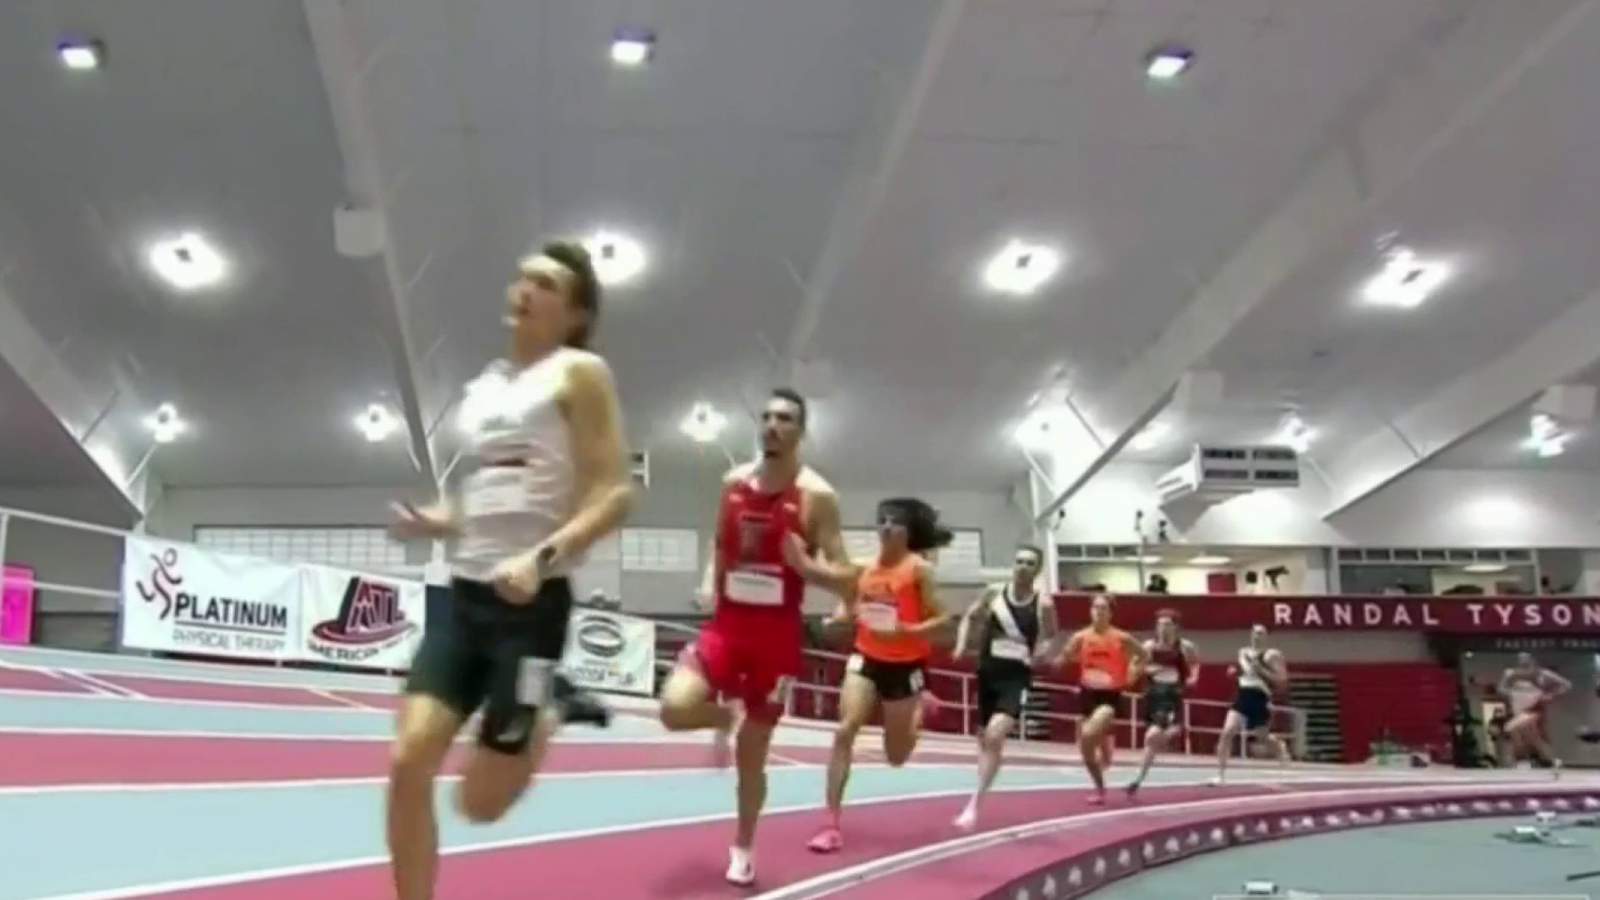 Ann Arbor student breaks US high school record for indoor mile run